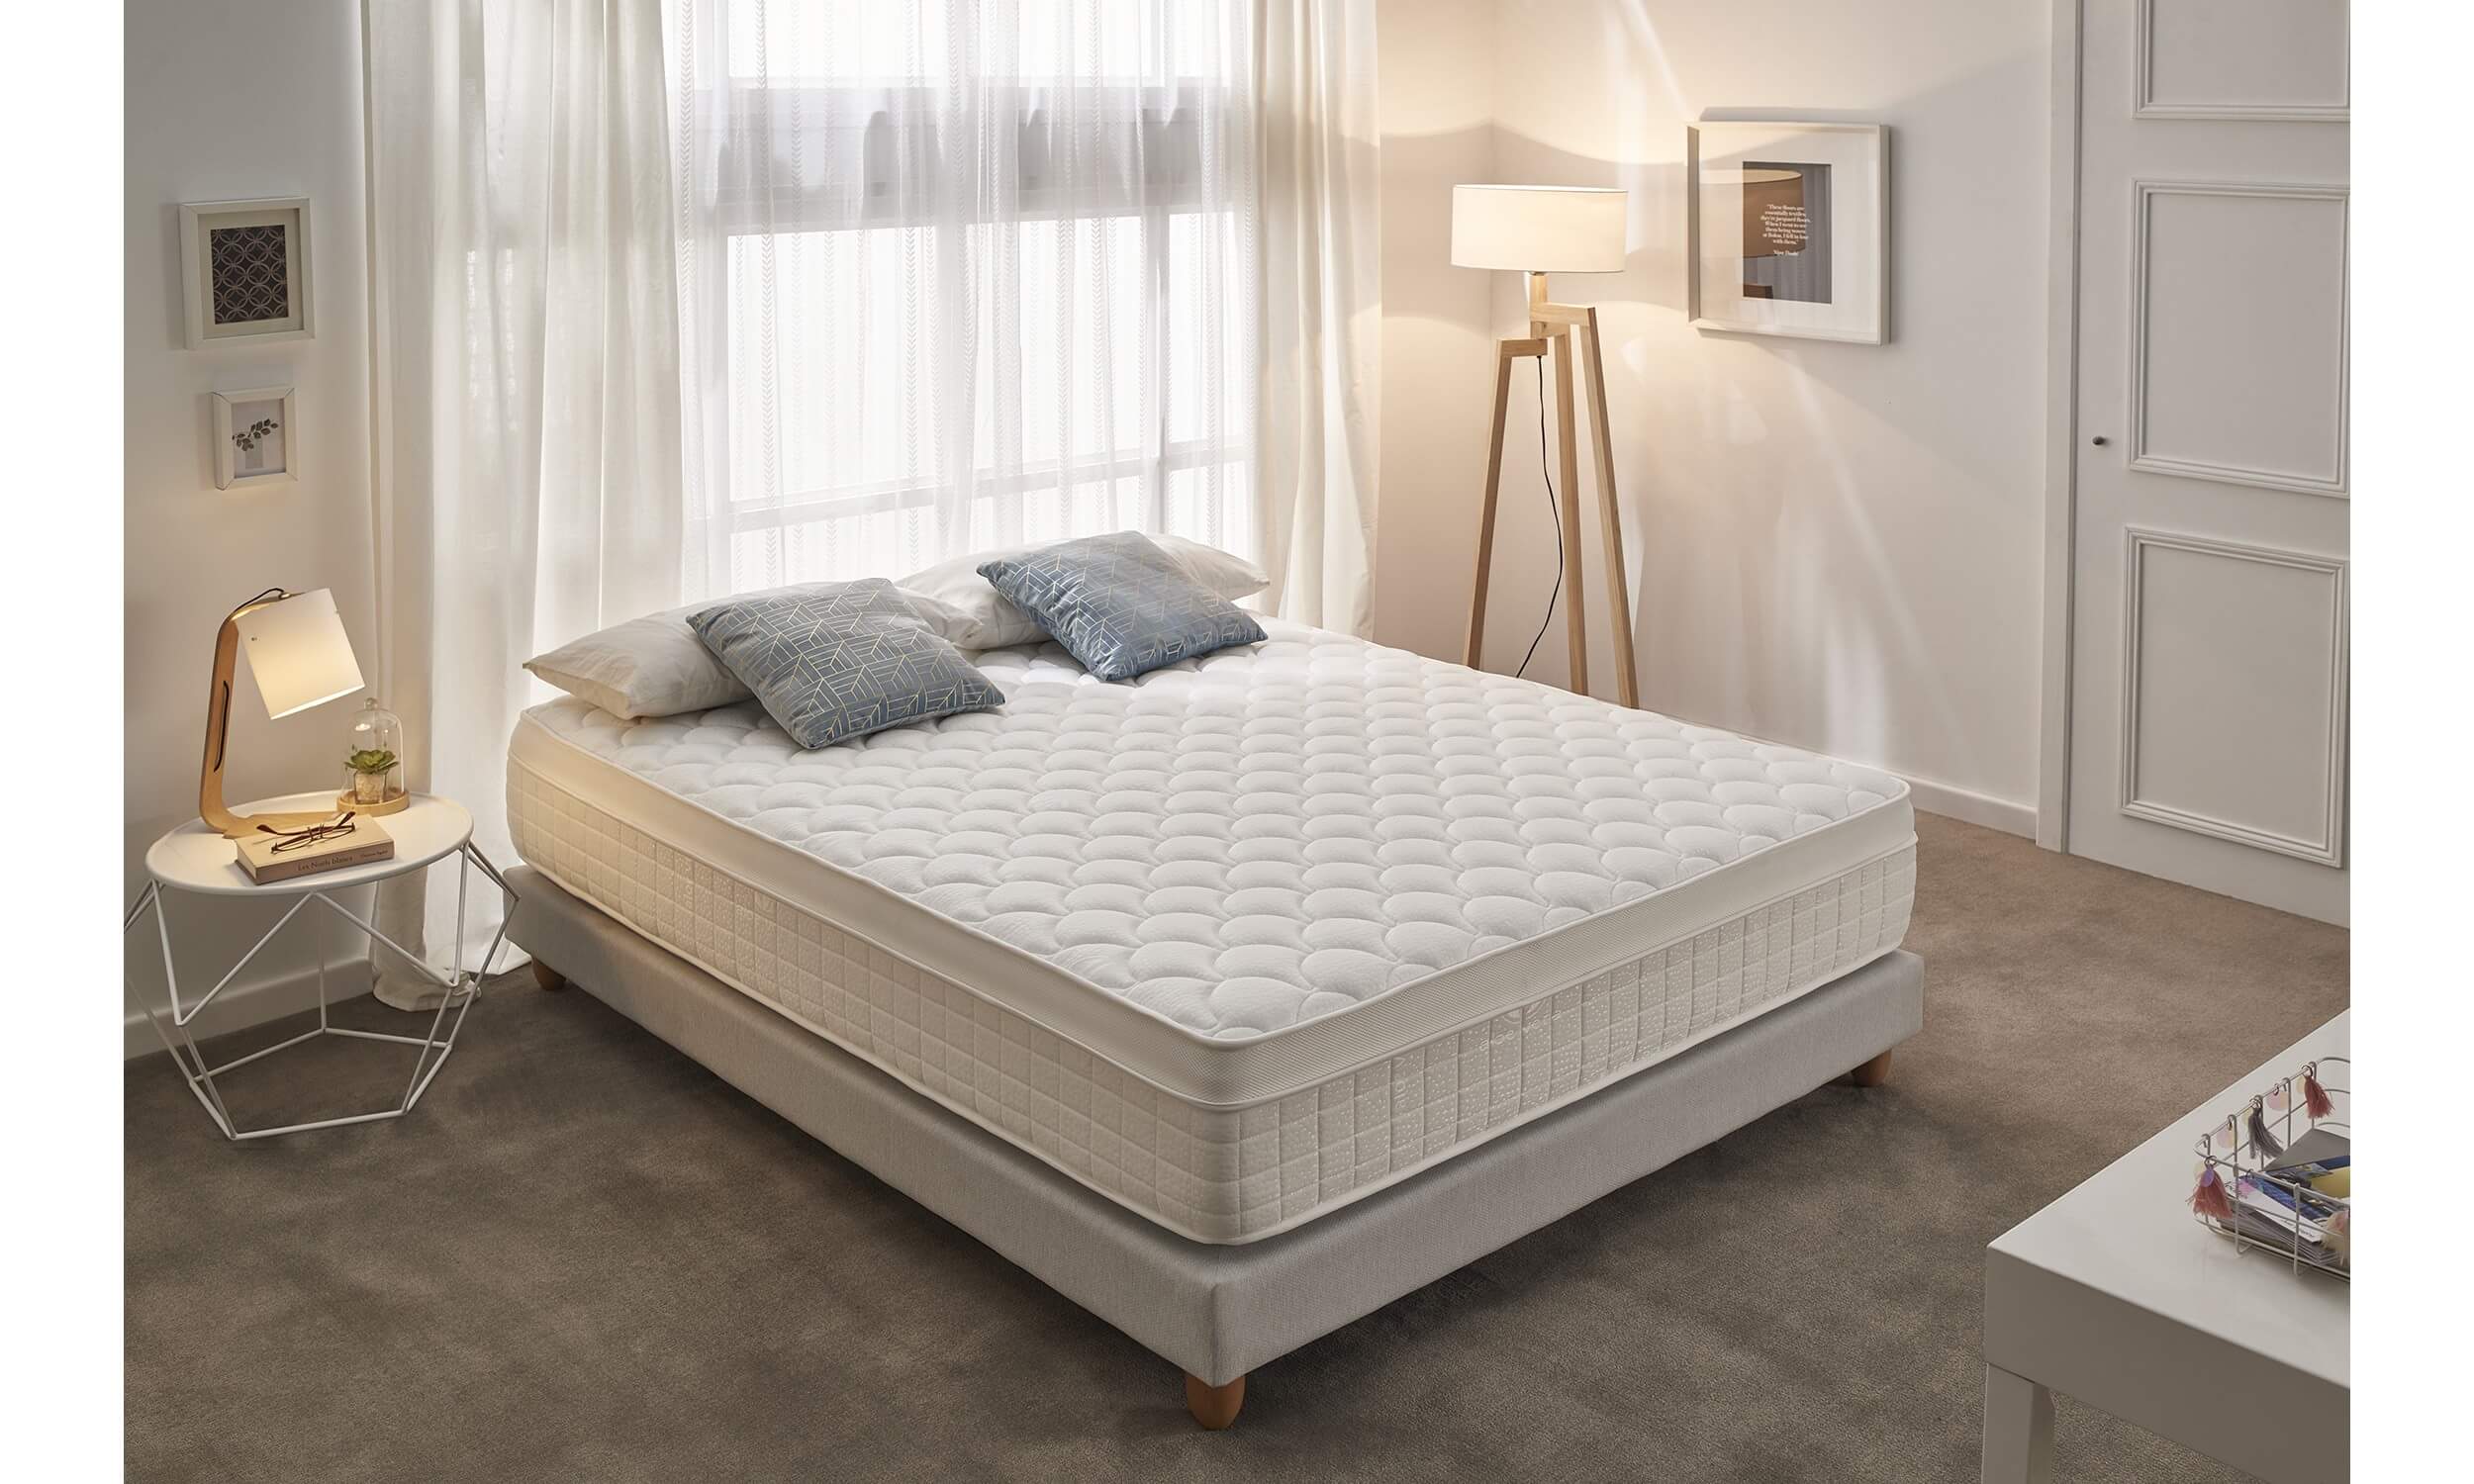 mattress on hardwood floor instead of box spring